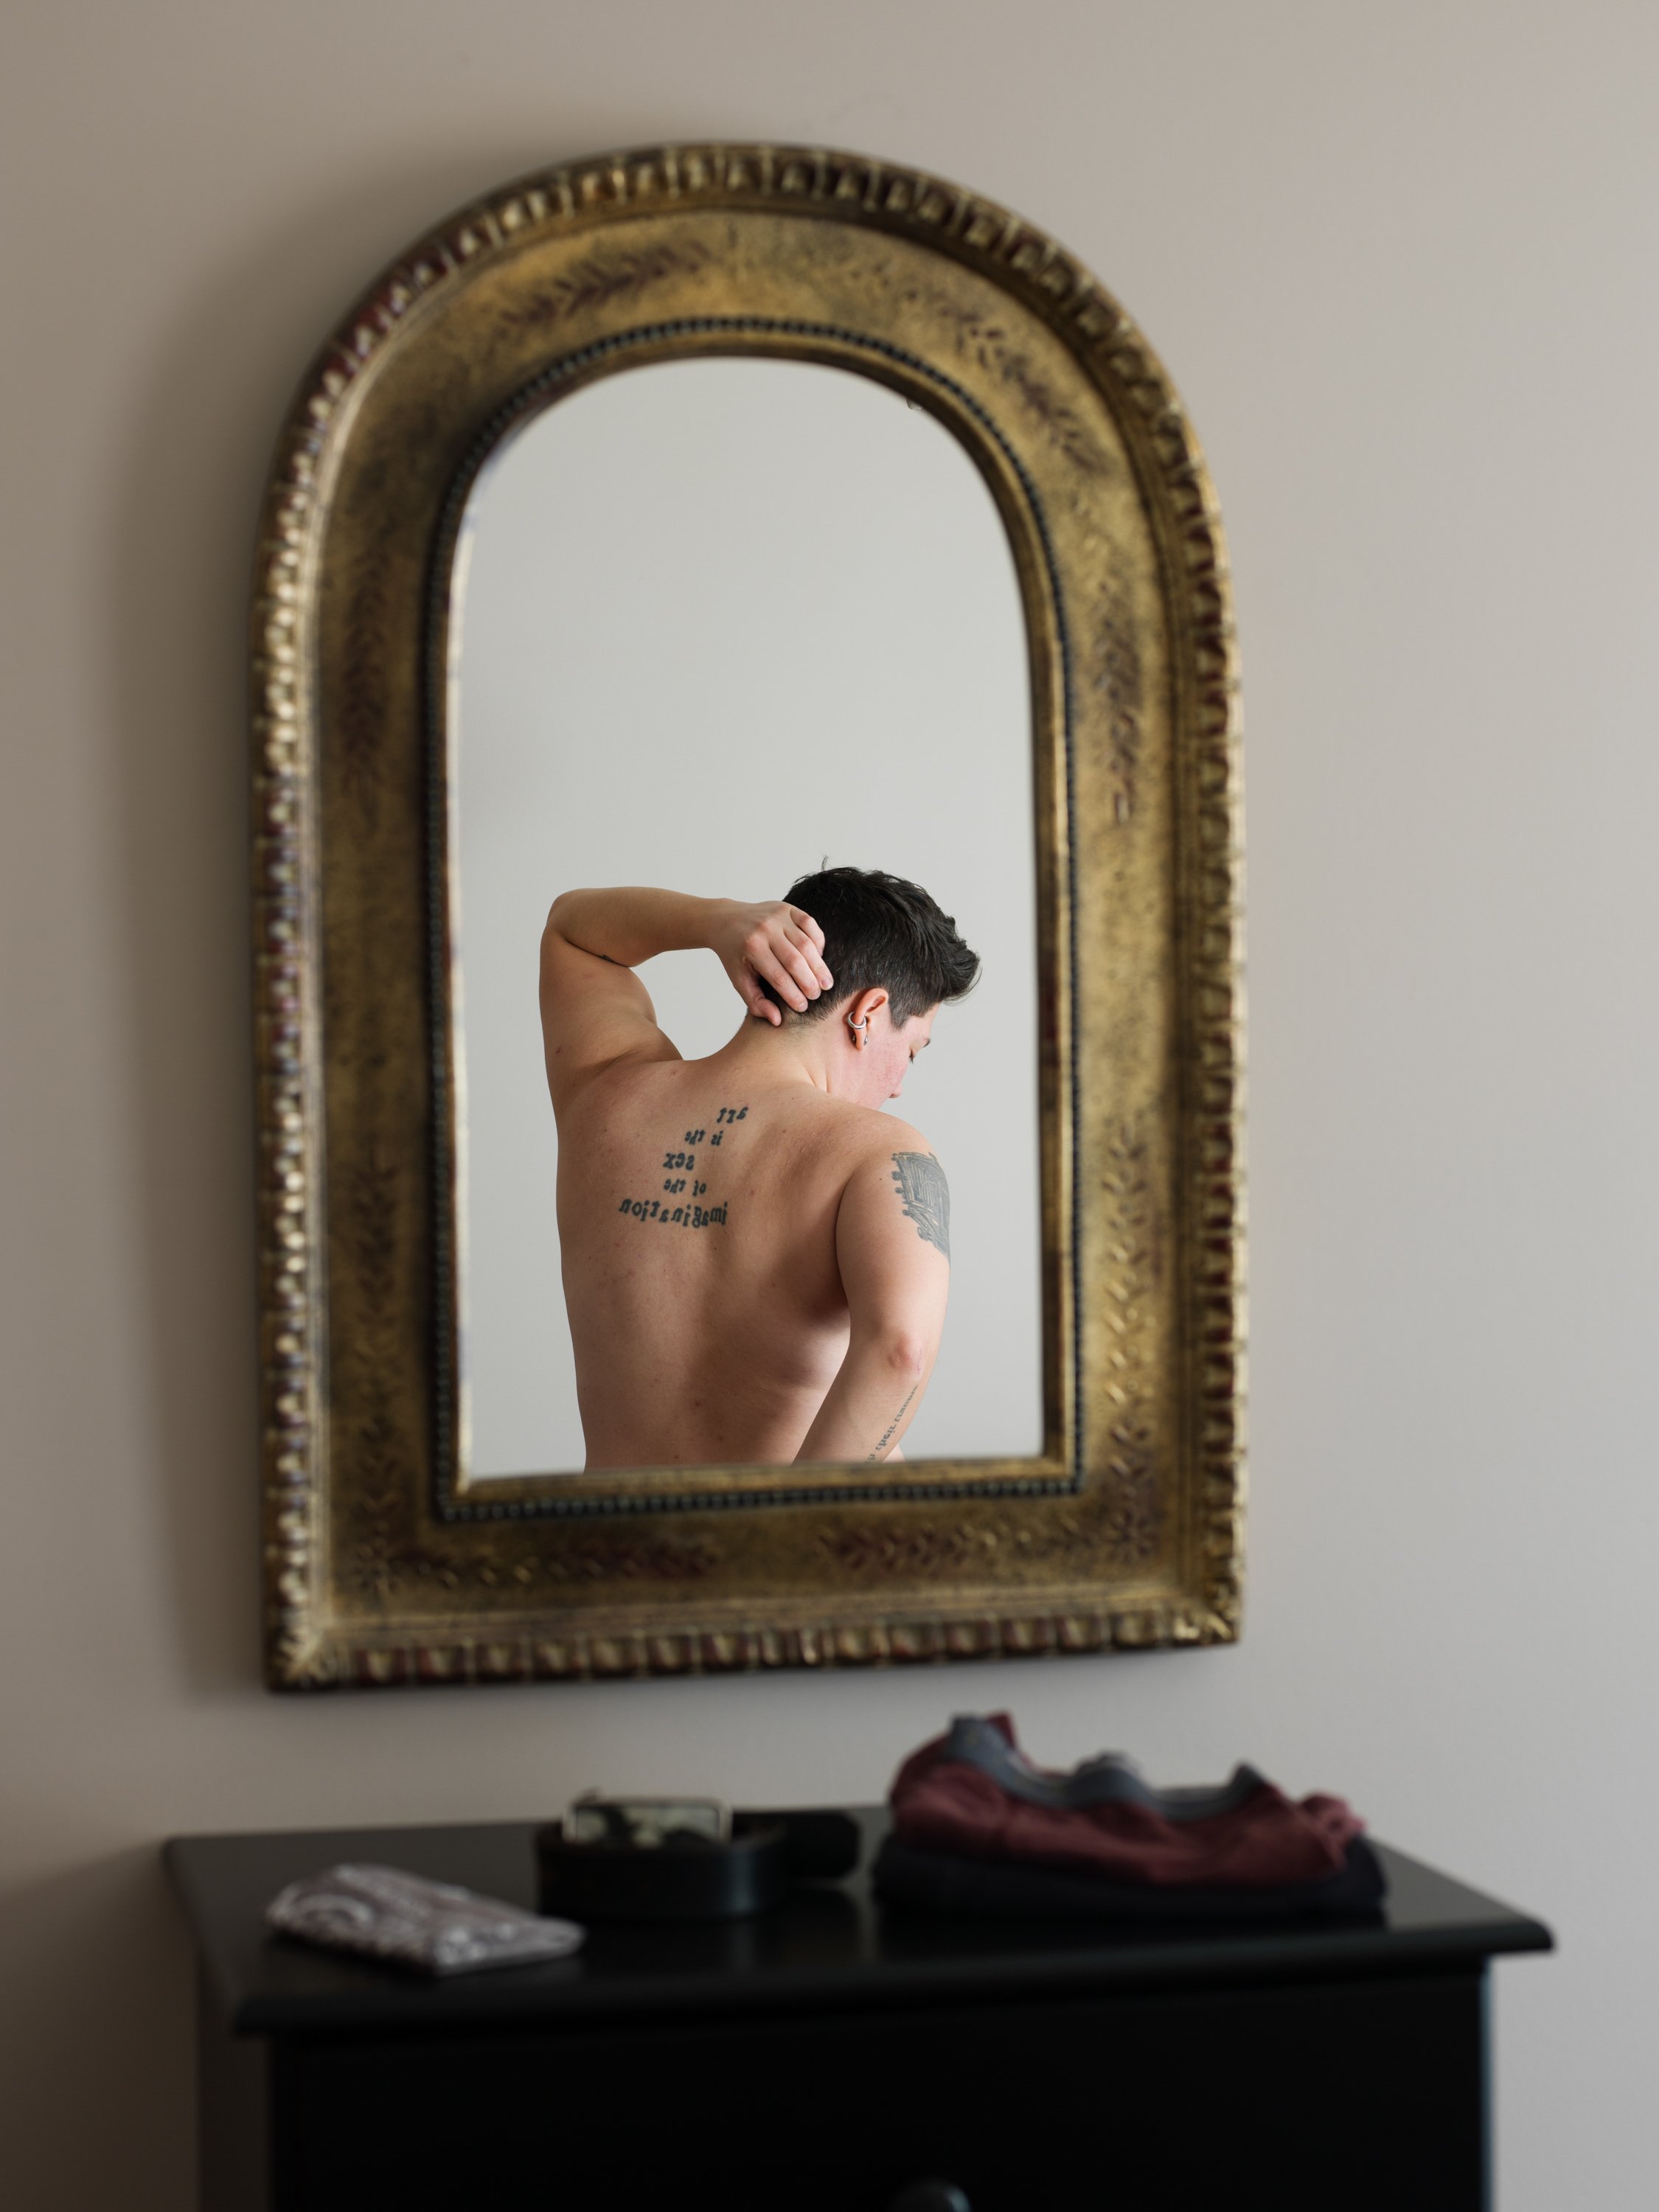  Self-portrait (Boston), 2013 